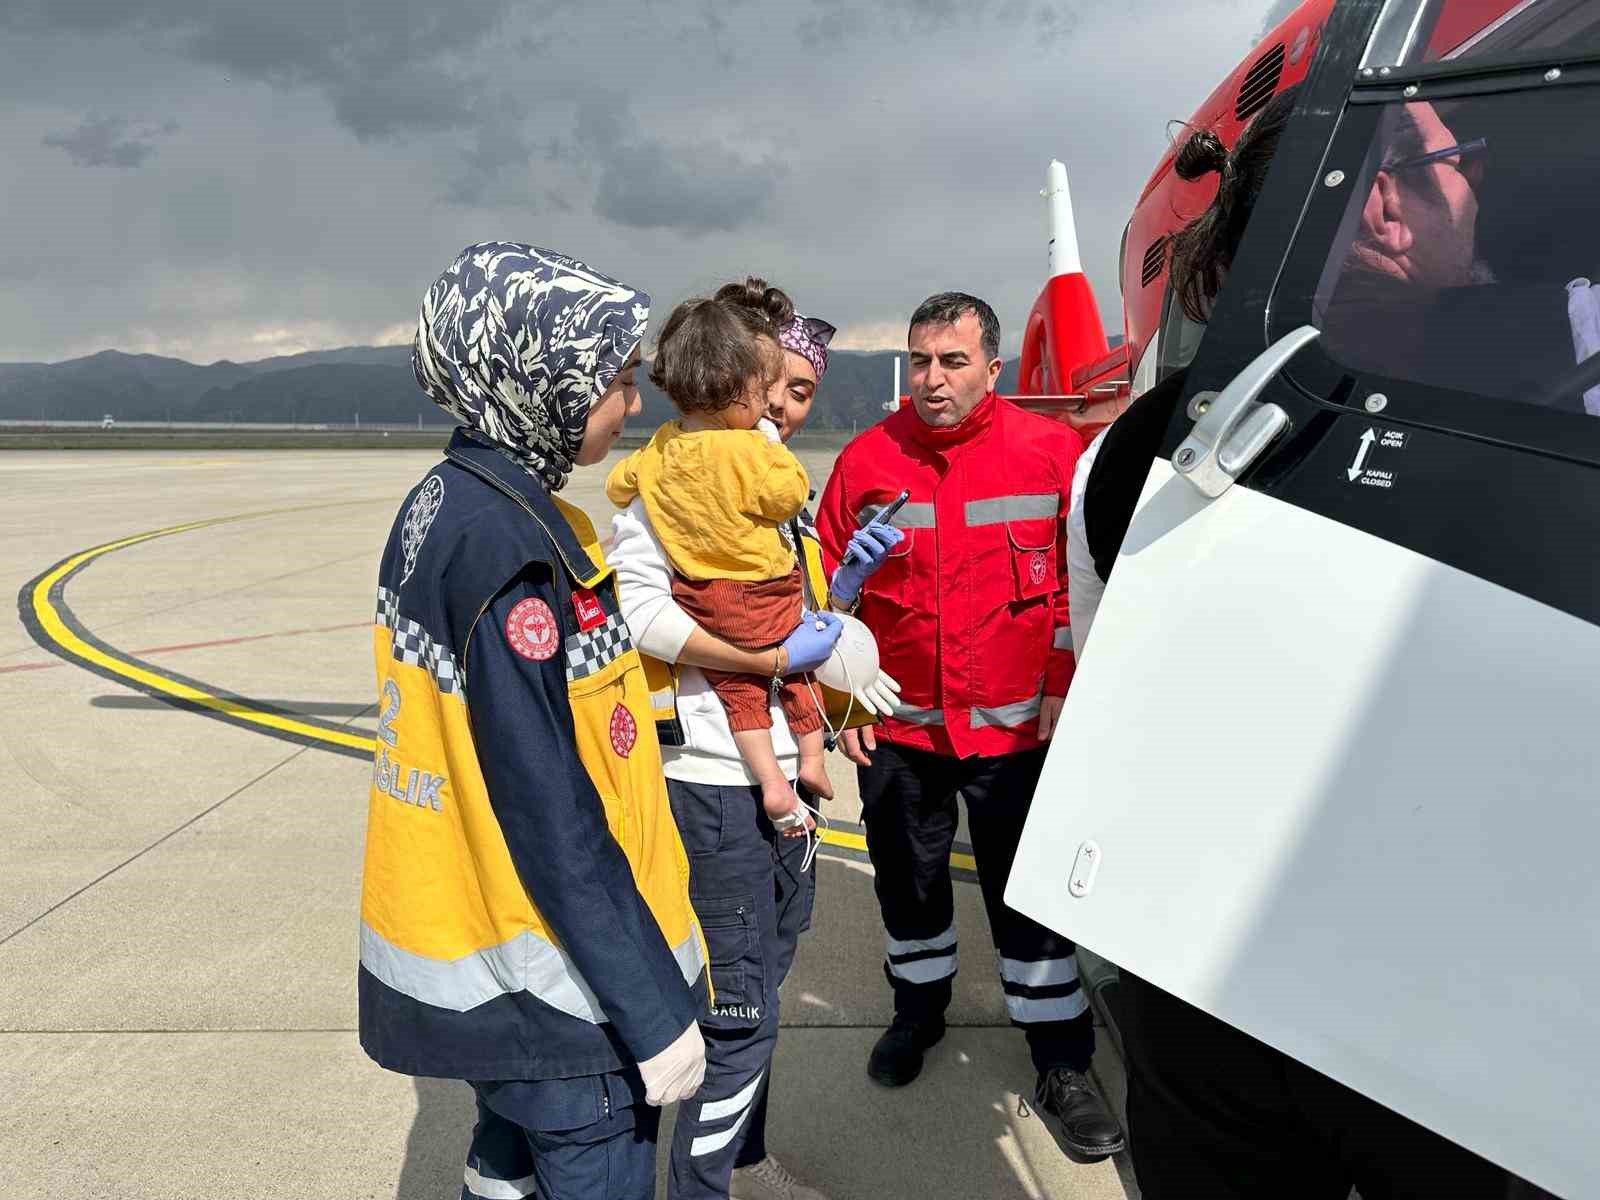 Şırnak’ta enfeksiyon şikayeti olan bebek ambulans helikopter ile Elazığ’a sevk edildi
